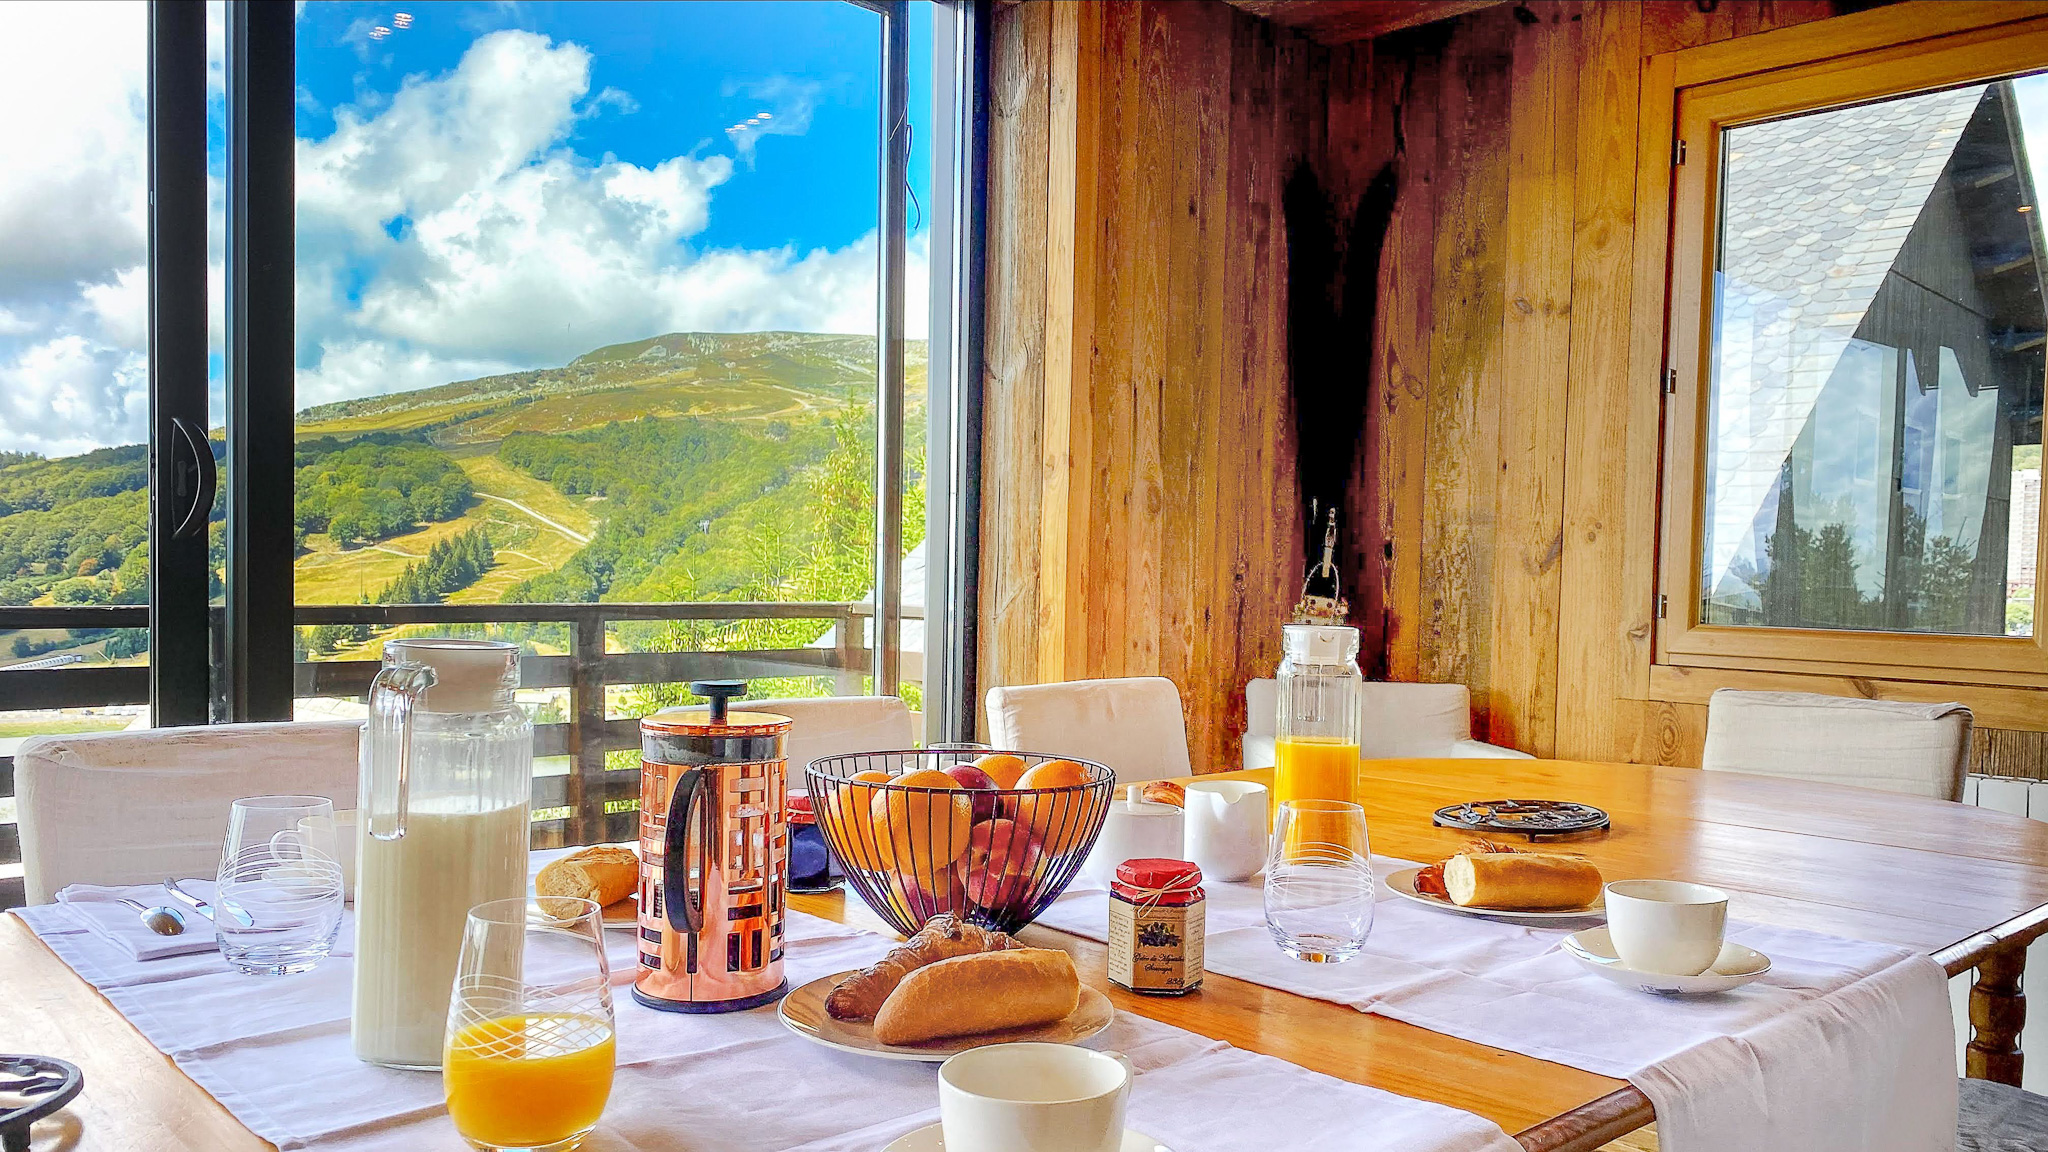 Chalet l'Anorak Super Besse, breakfast overlooking the slopes of Super Besse